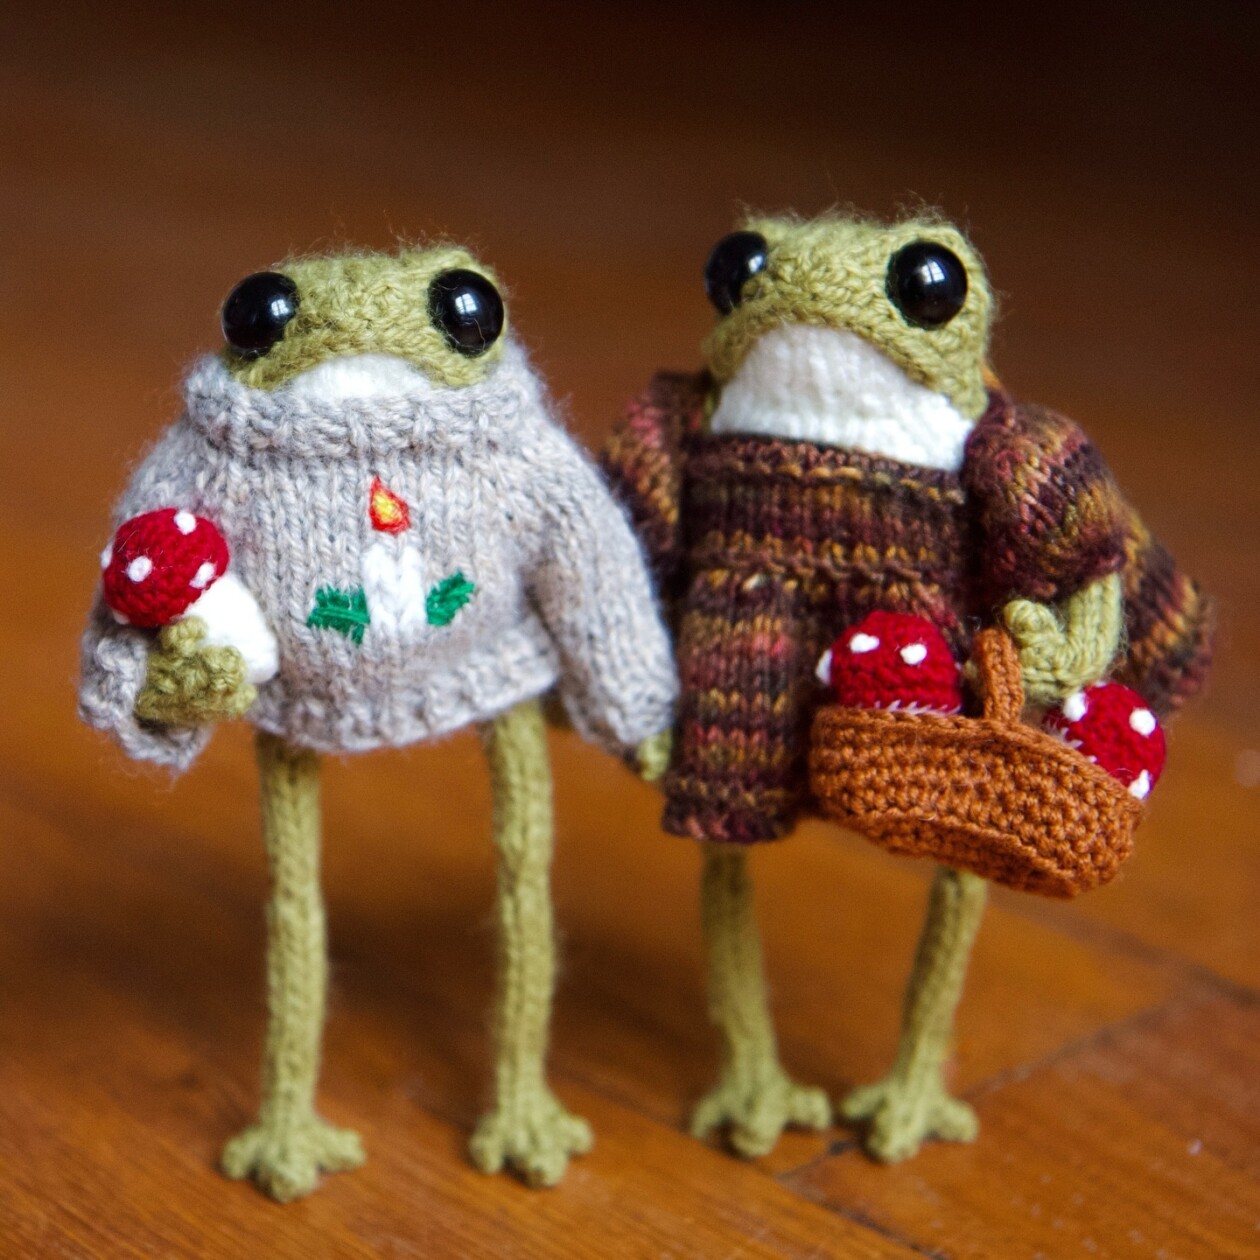 Enchanting Anthropomorphized Frog Crochet Patterns By Elliot (7)